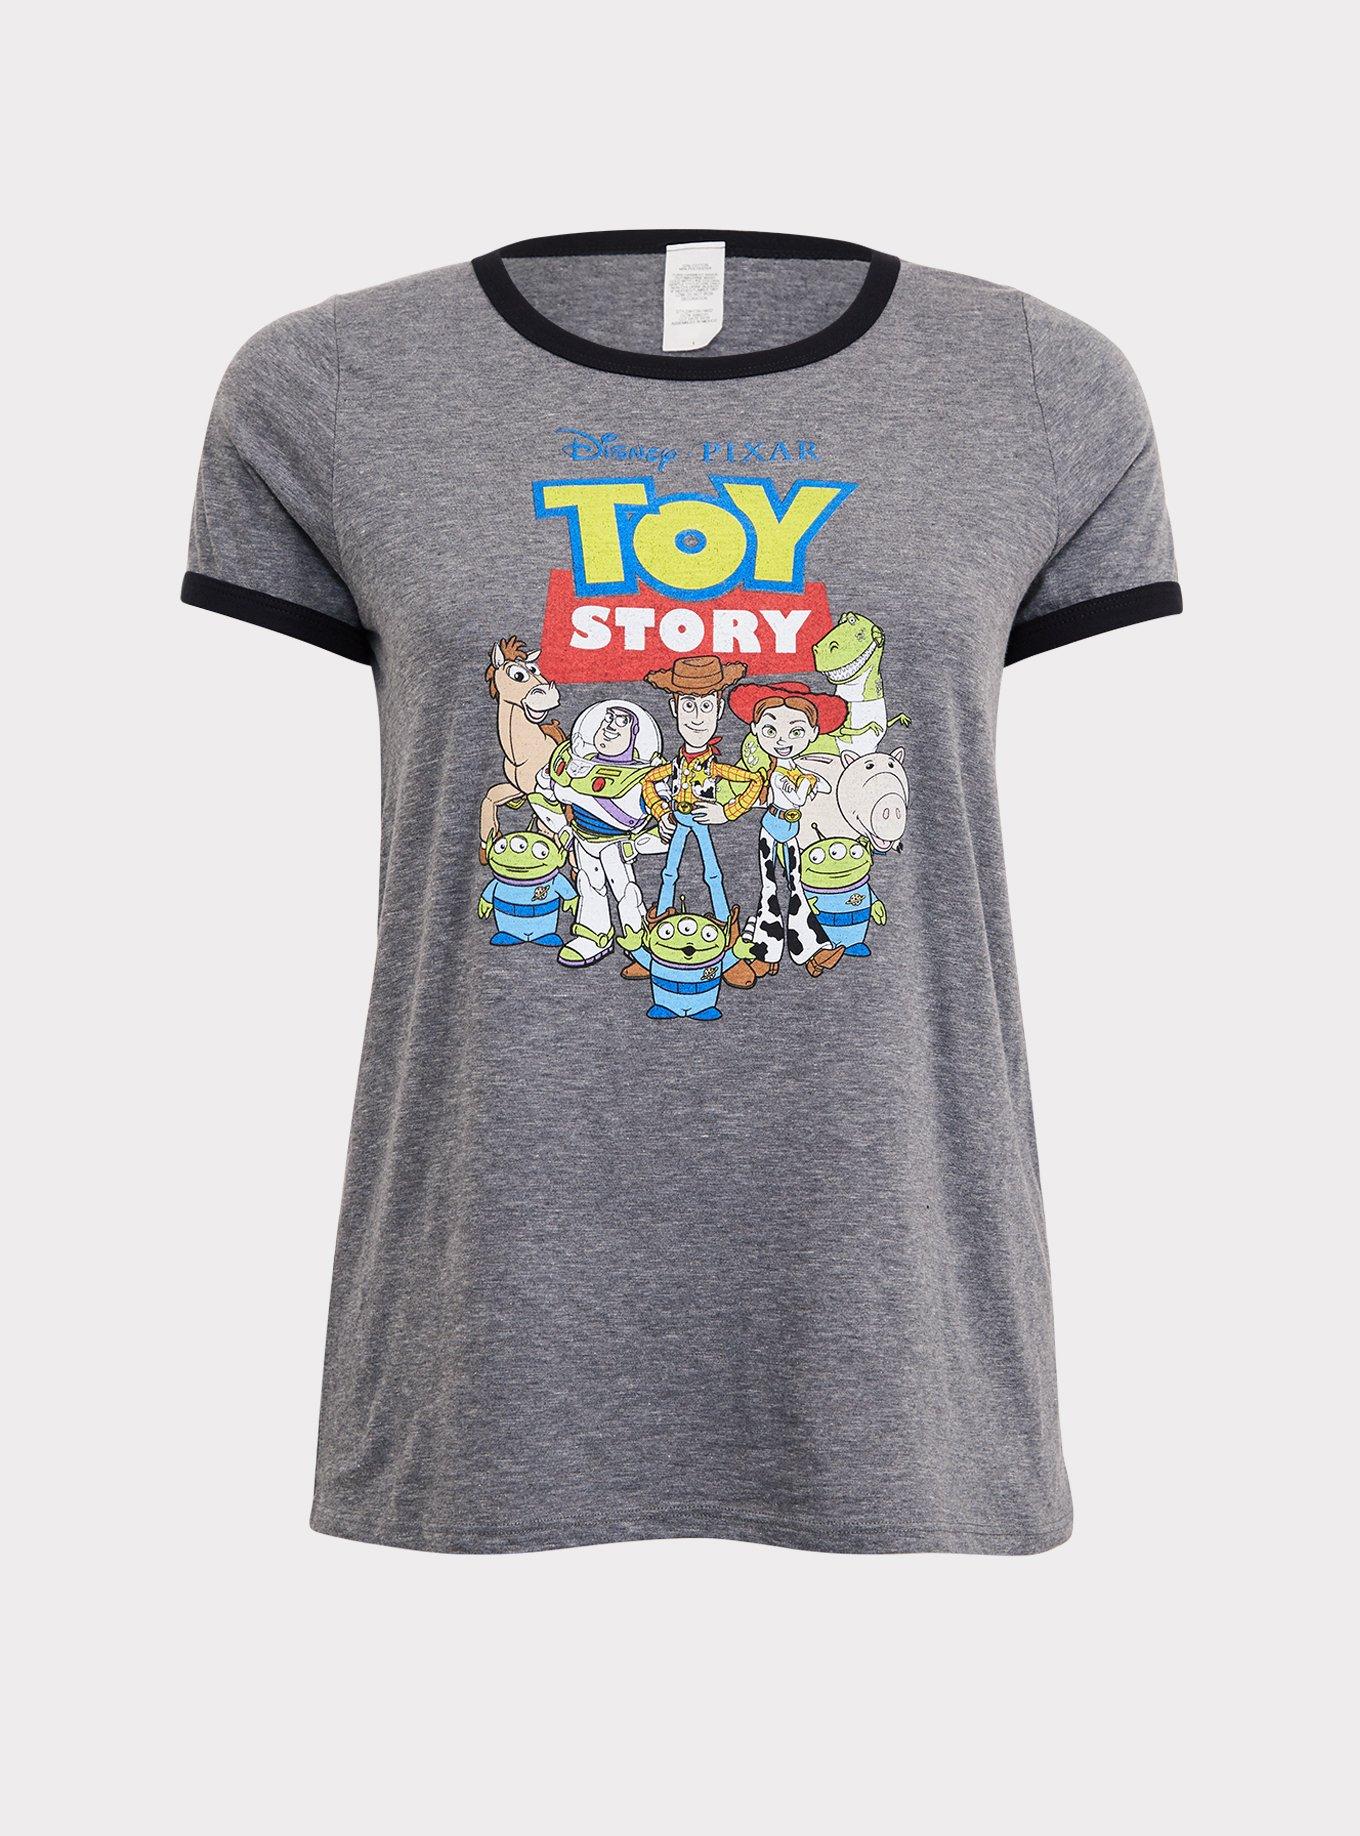 Plus Size - Disney Grey Fit - Story Toy Tee Torrid Classic Pixar Ringer